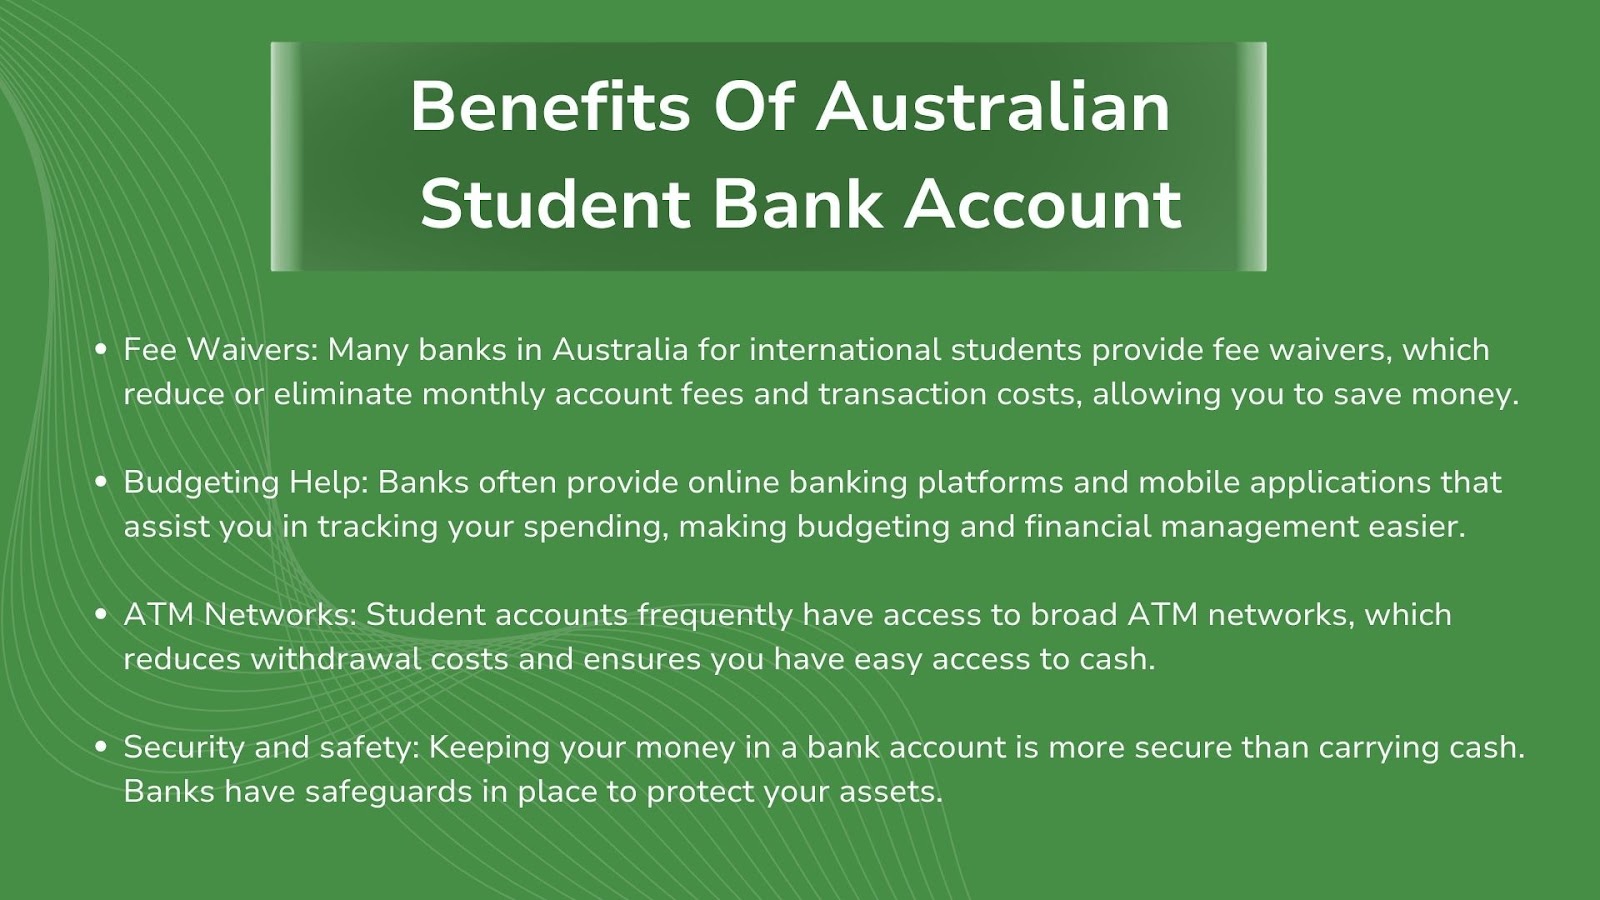 Benefits of Australian student bank account.